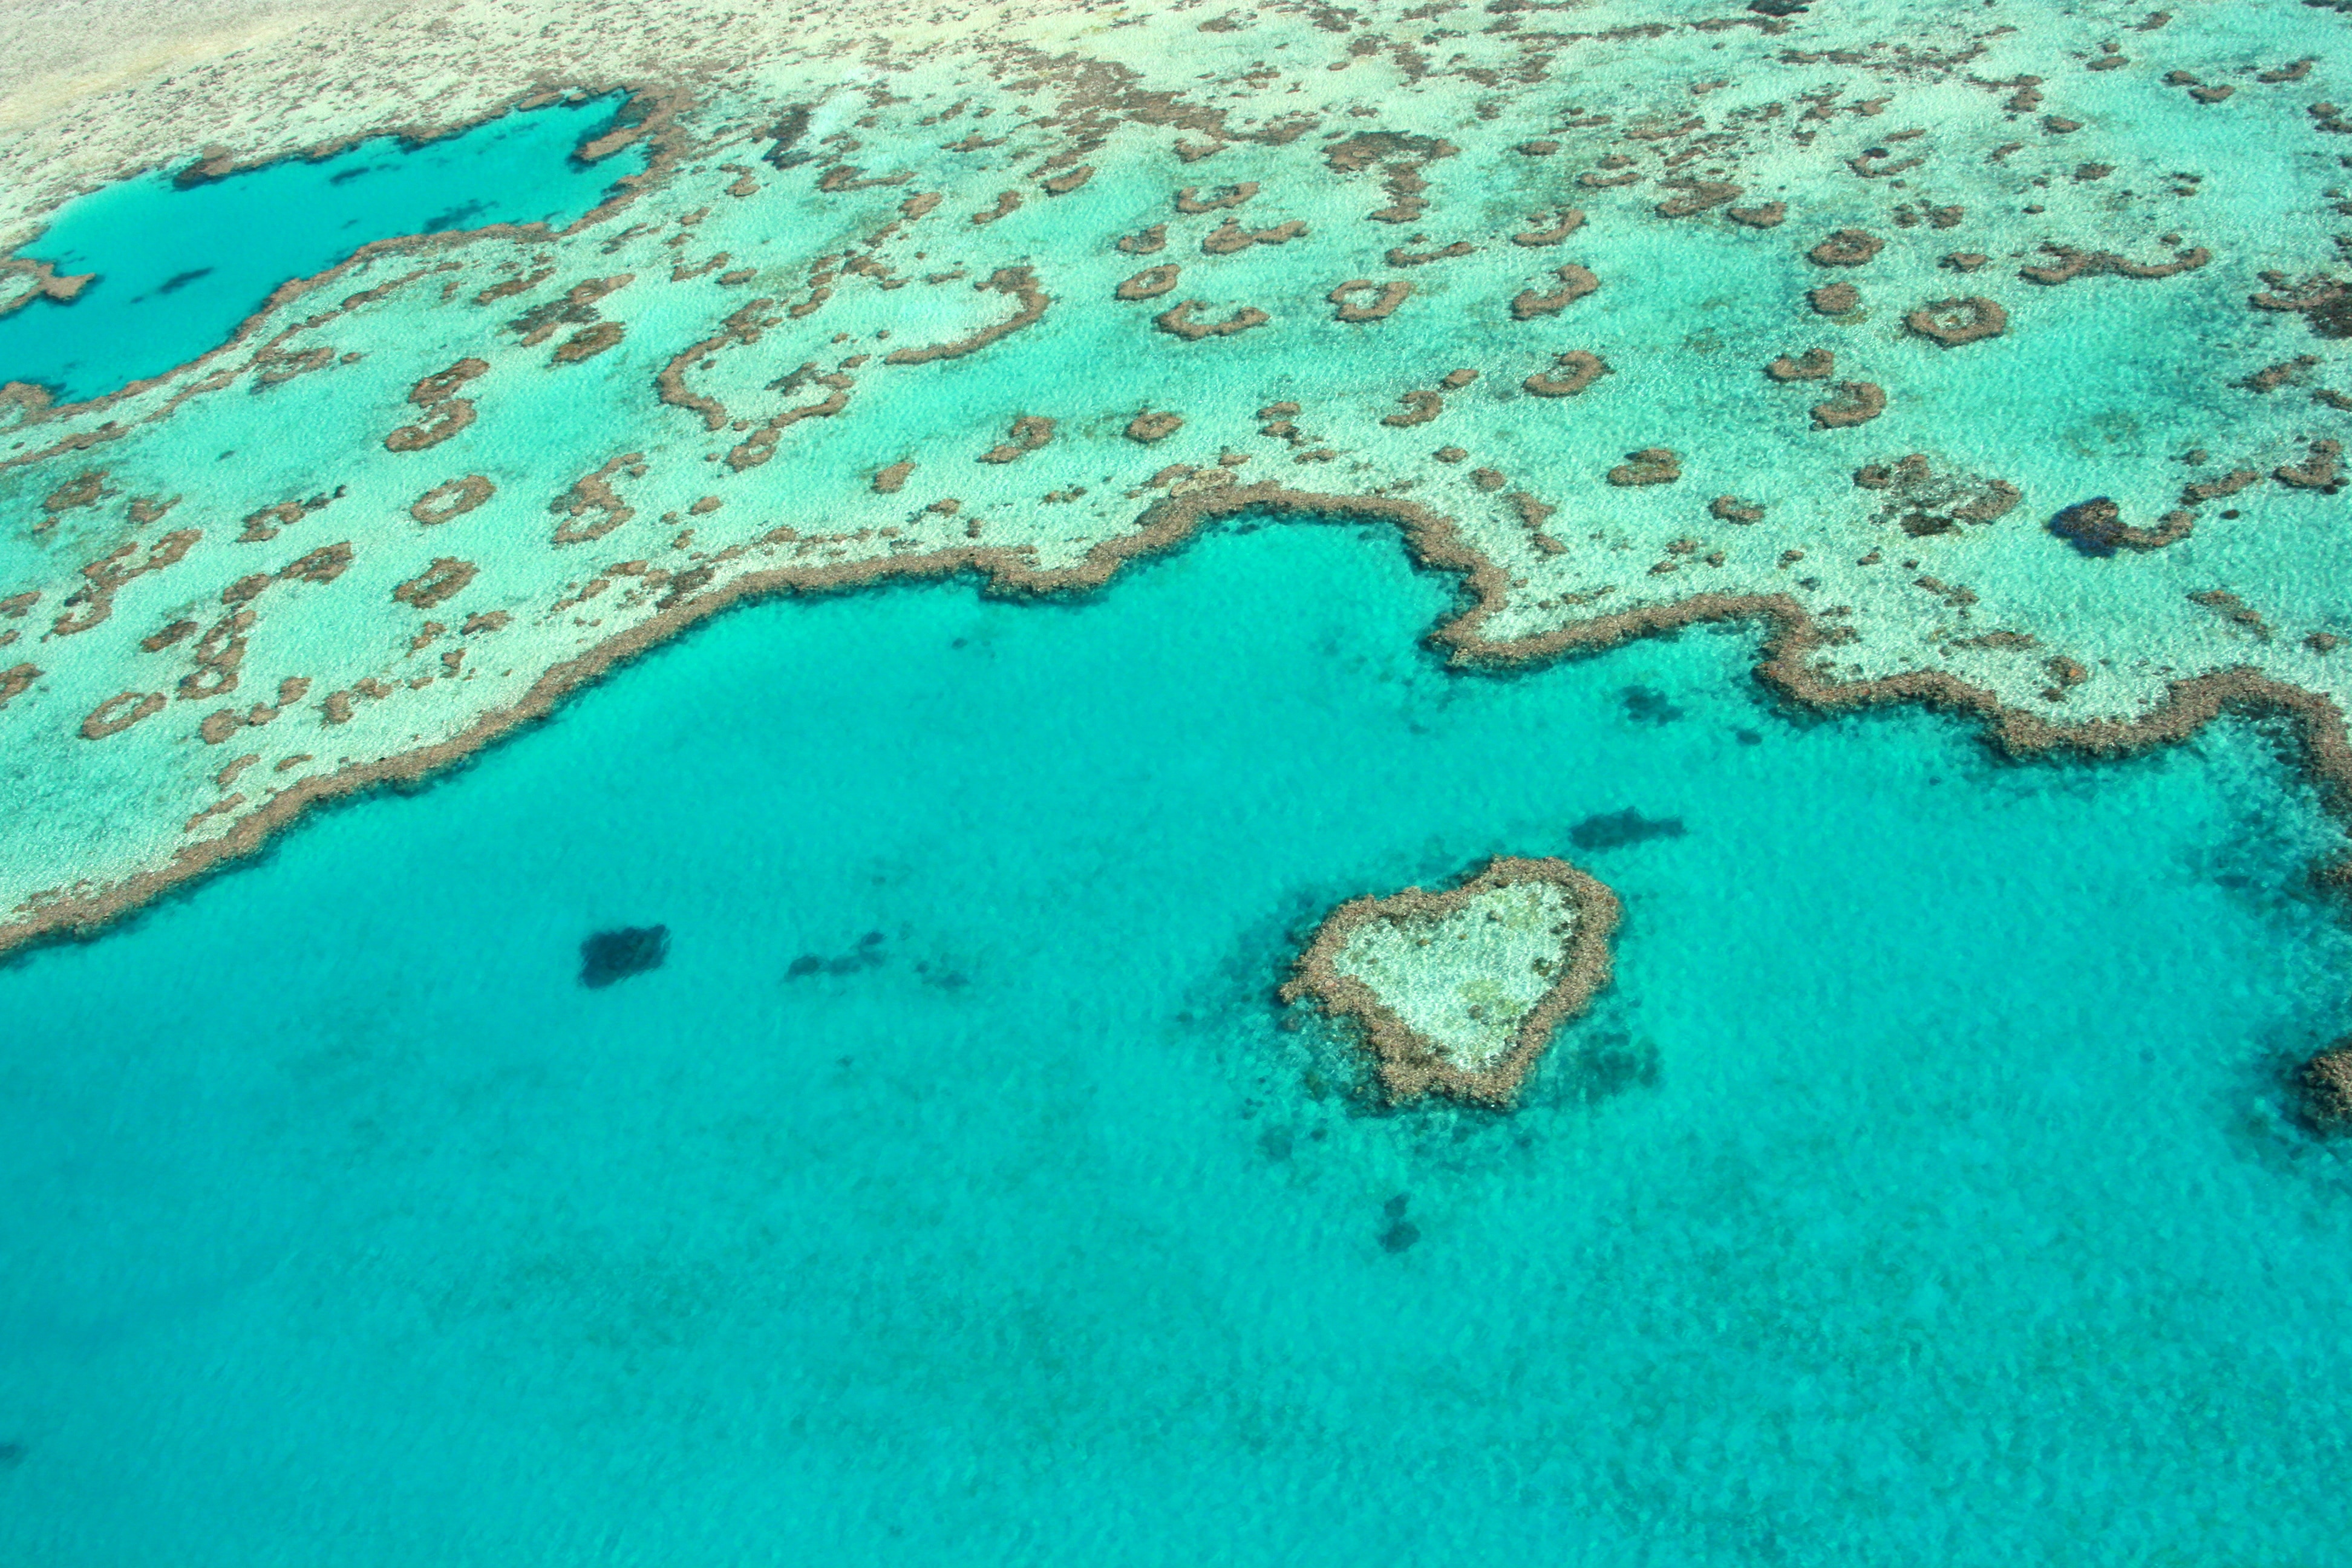 Guide to Heart Reef, Whitsundays - Tourism Australia